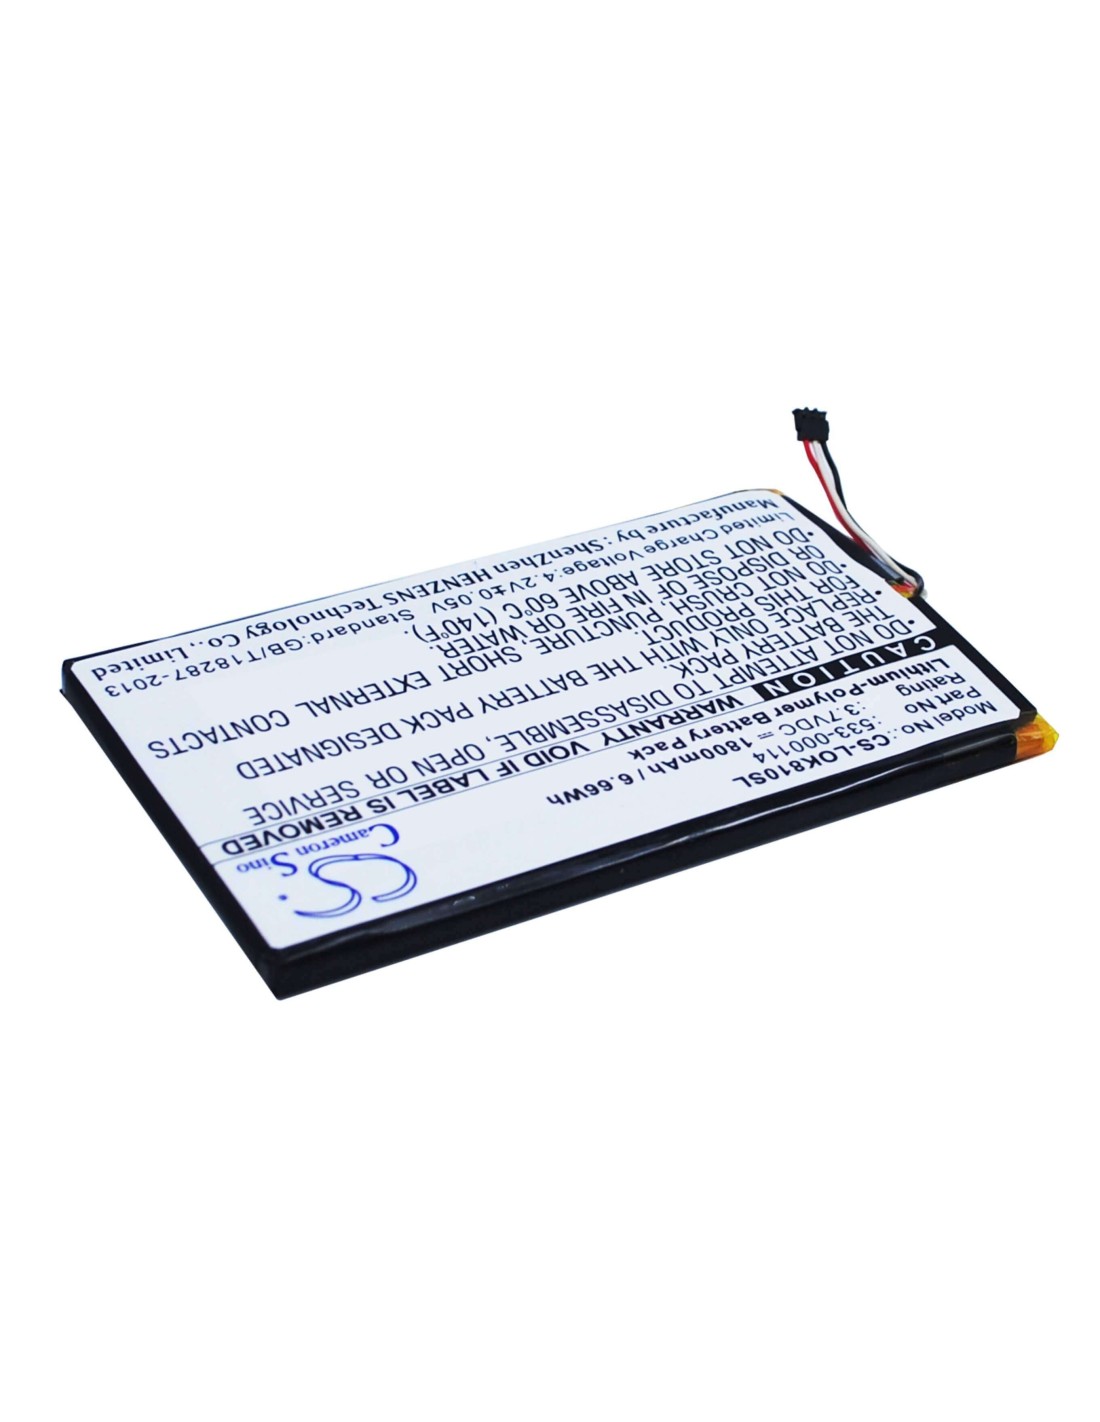 Battery for Logitech Iiiuminated Keyboard K810, K810 3.7V, 1800mAh - 6.66Wh